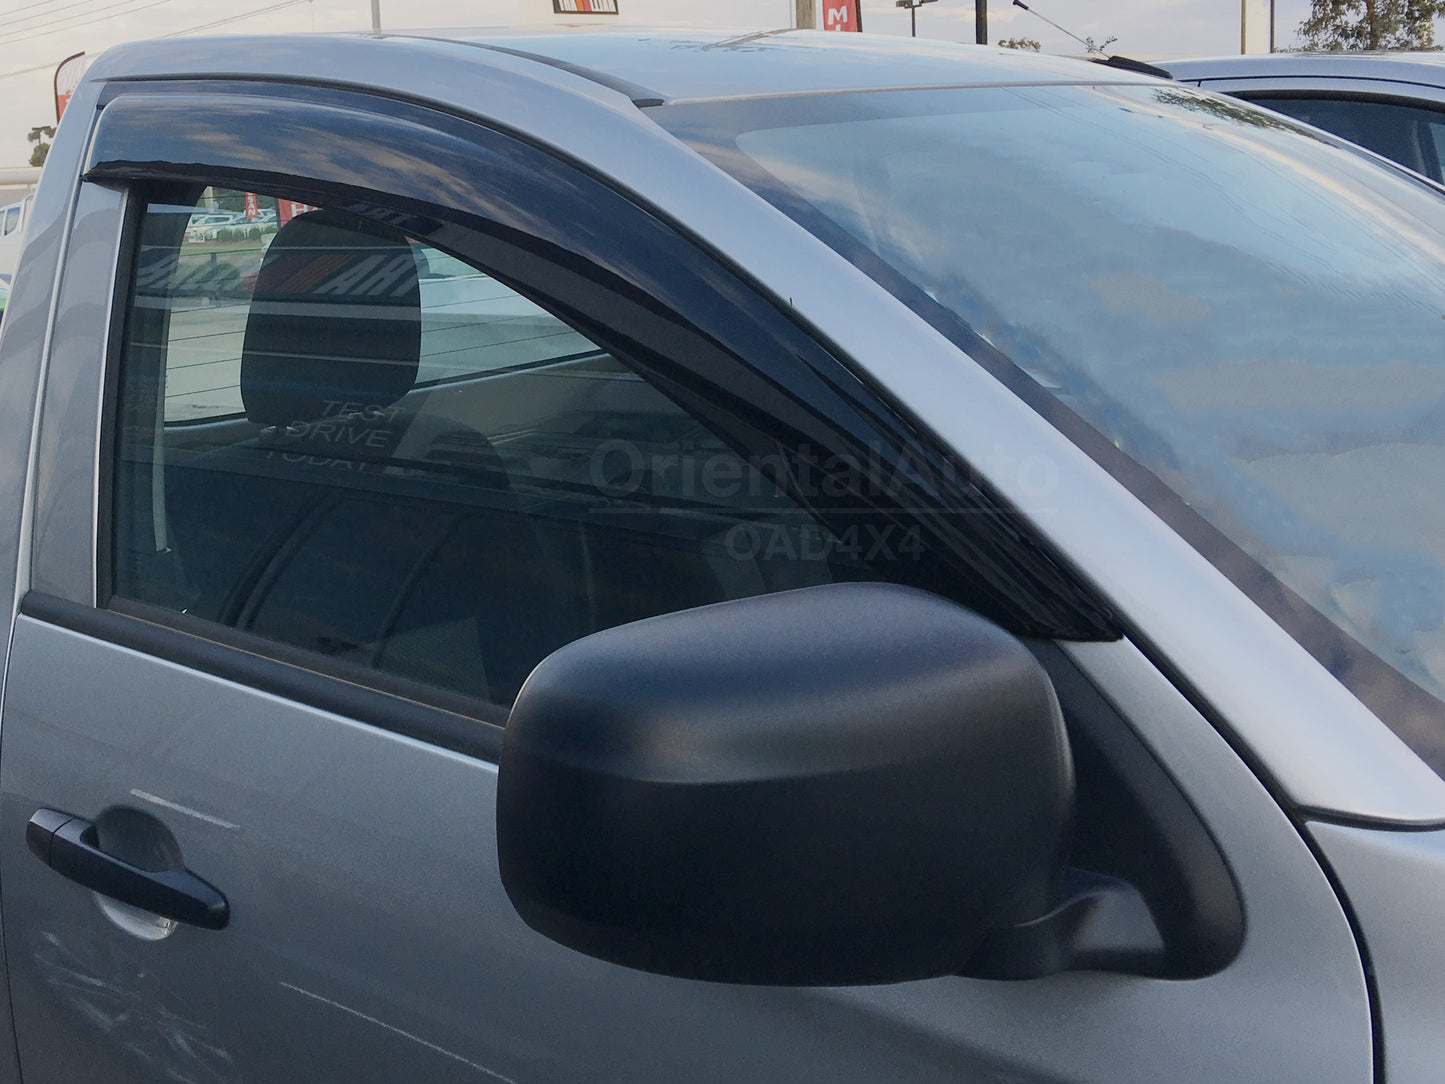 Injection Modeling Bonnet Protector & Injection Weathershield for Mitsubishi Triton MQ Single Cab 2015-2018 Weather Shields Window Visor + Hood Protector Bonnet Guard